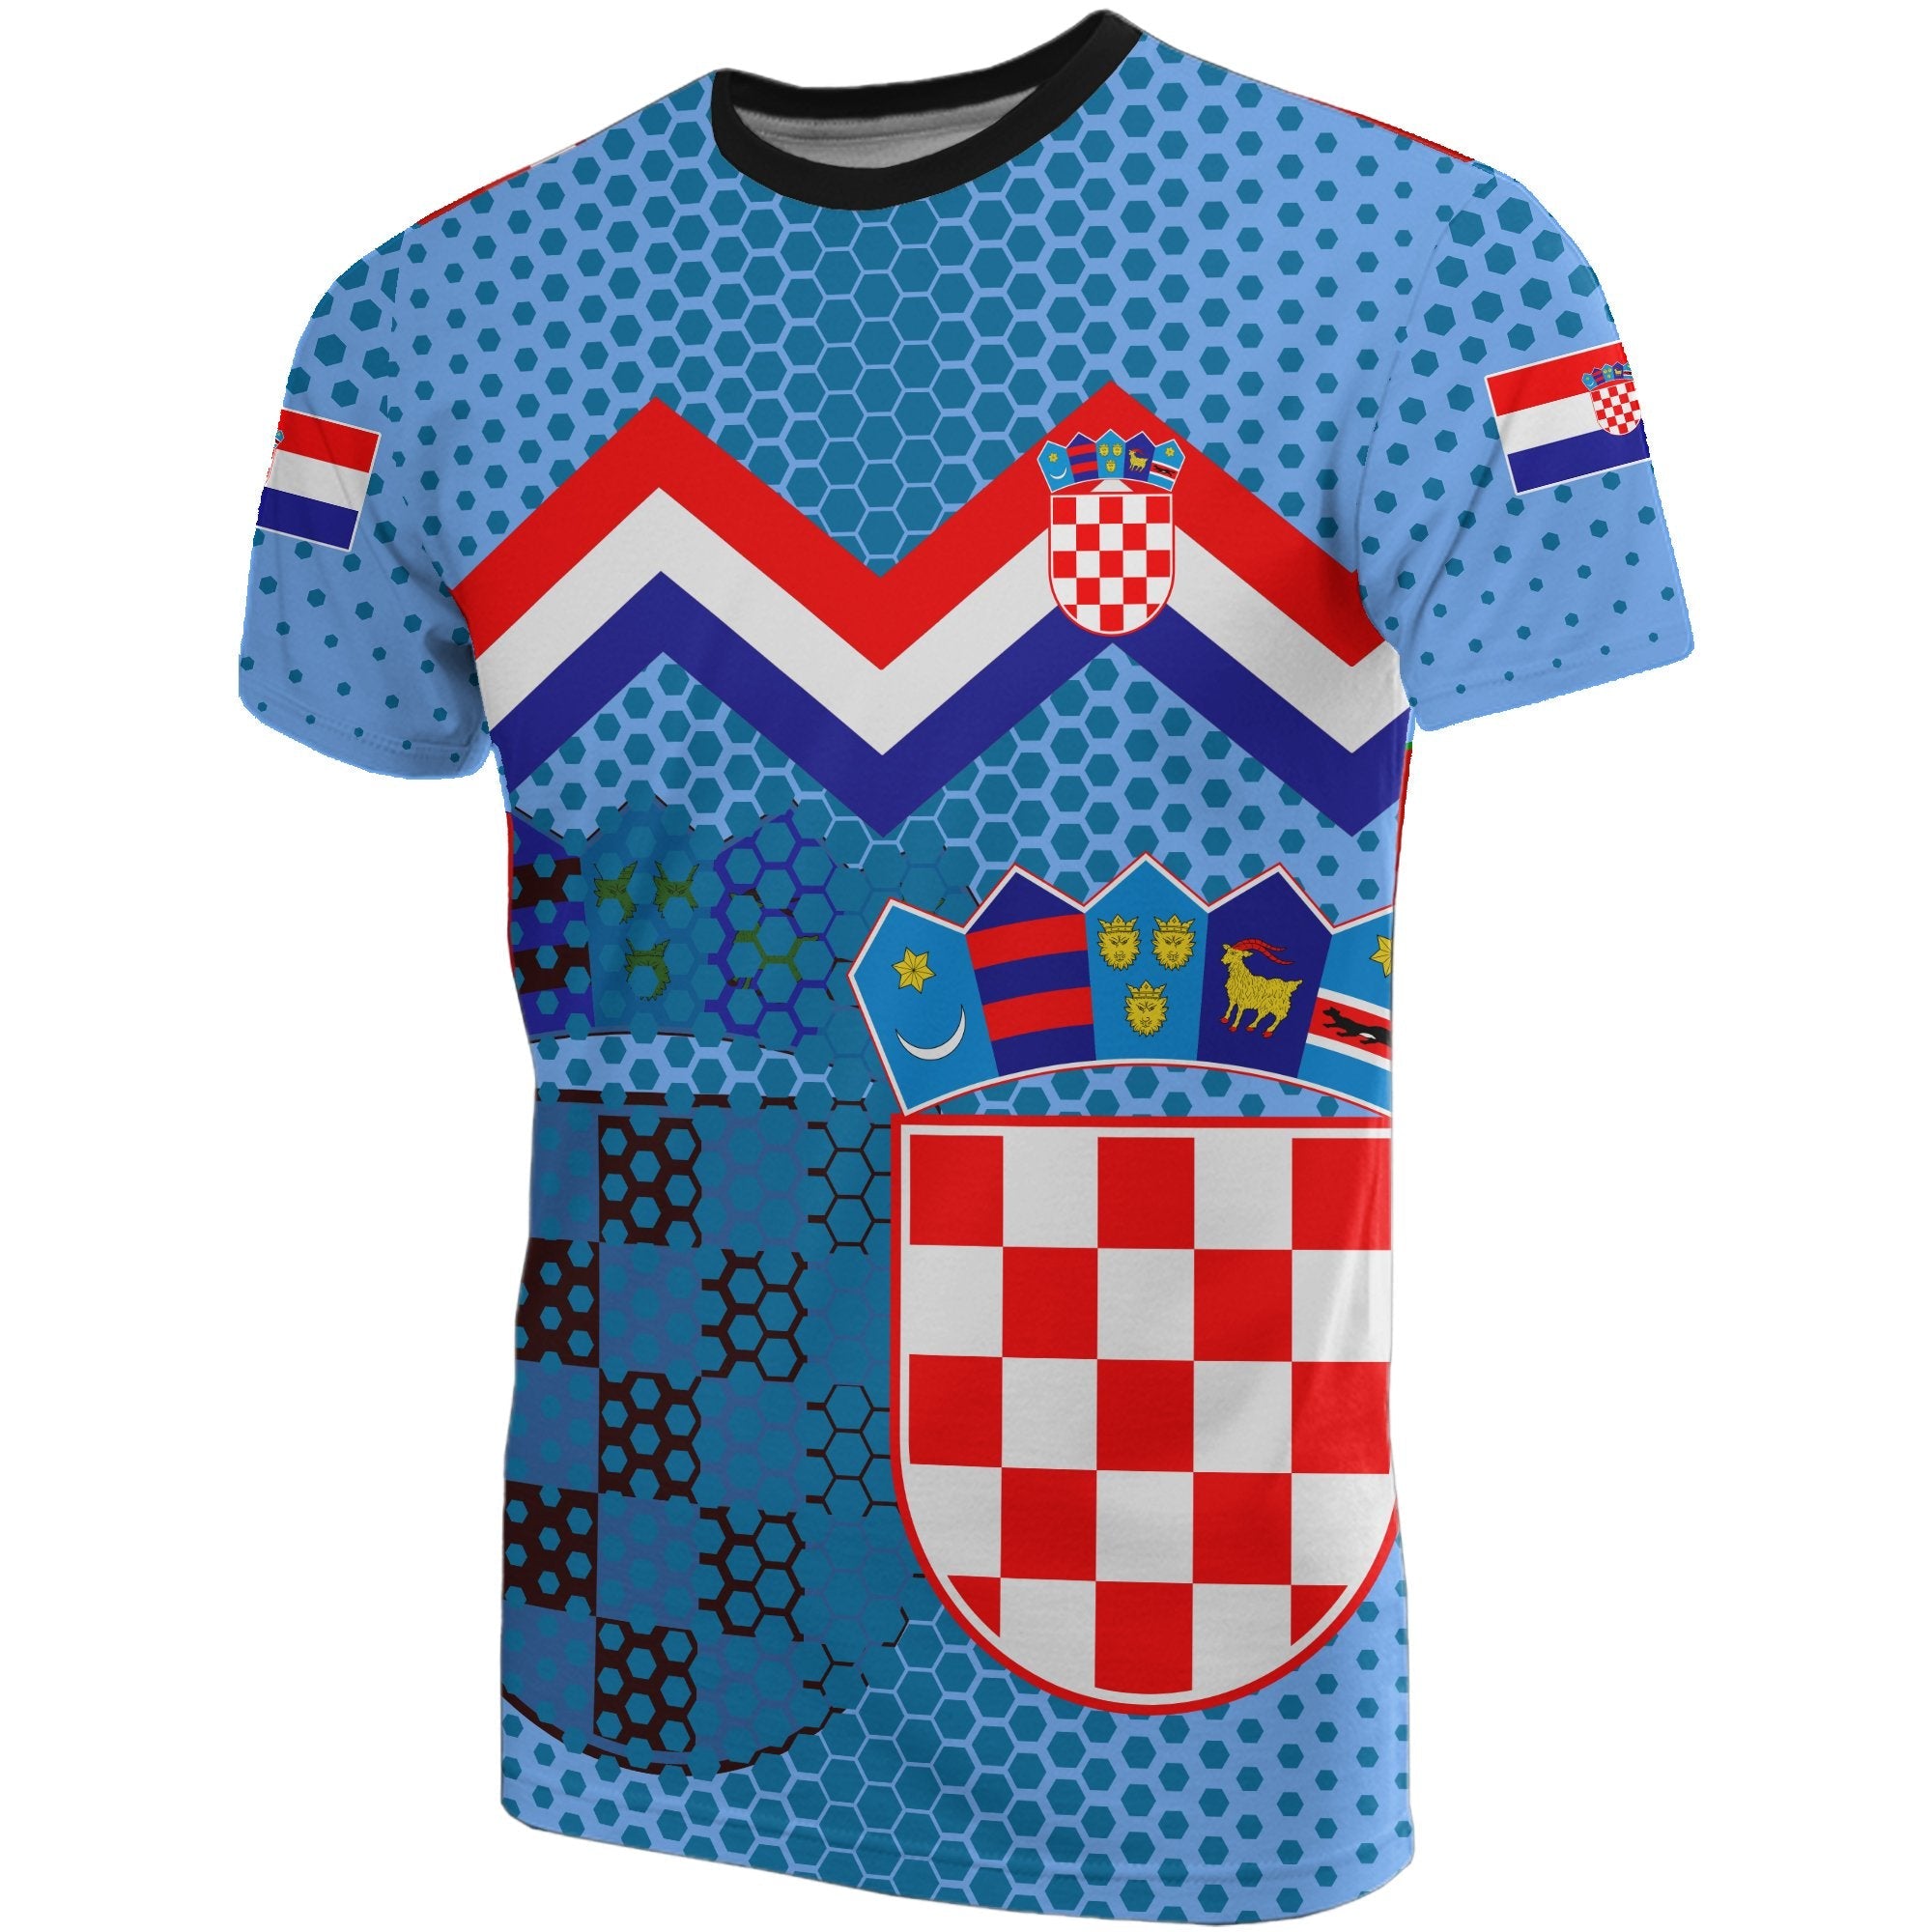 hrvatska-croatia-coat-of-arms-t-shirt-blue-2nd